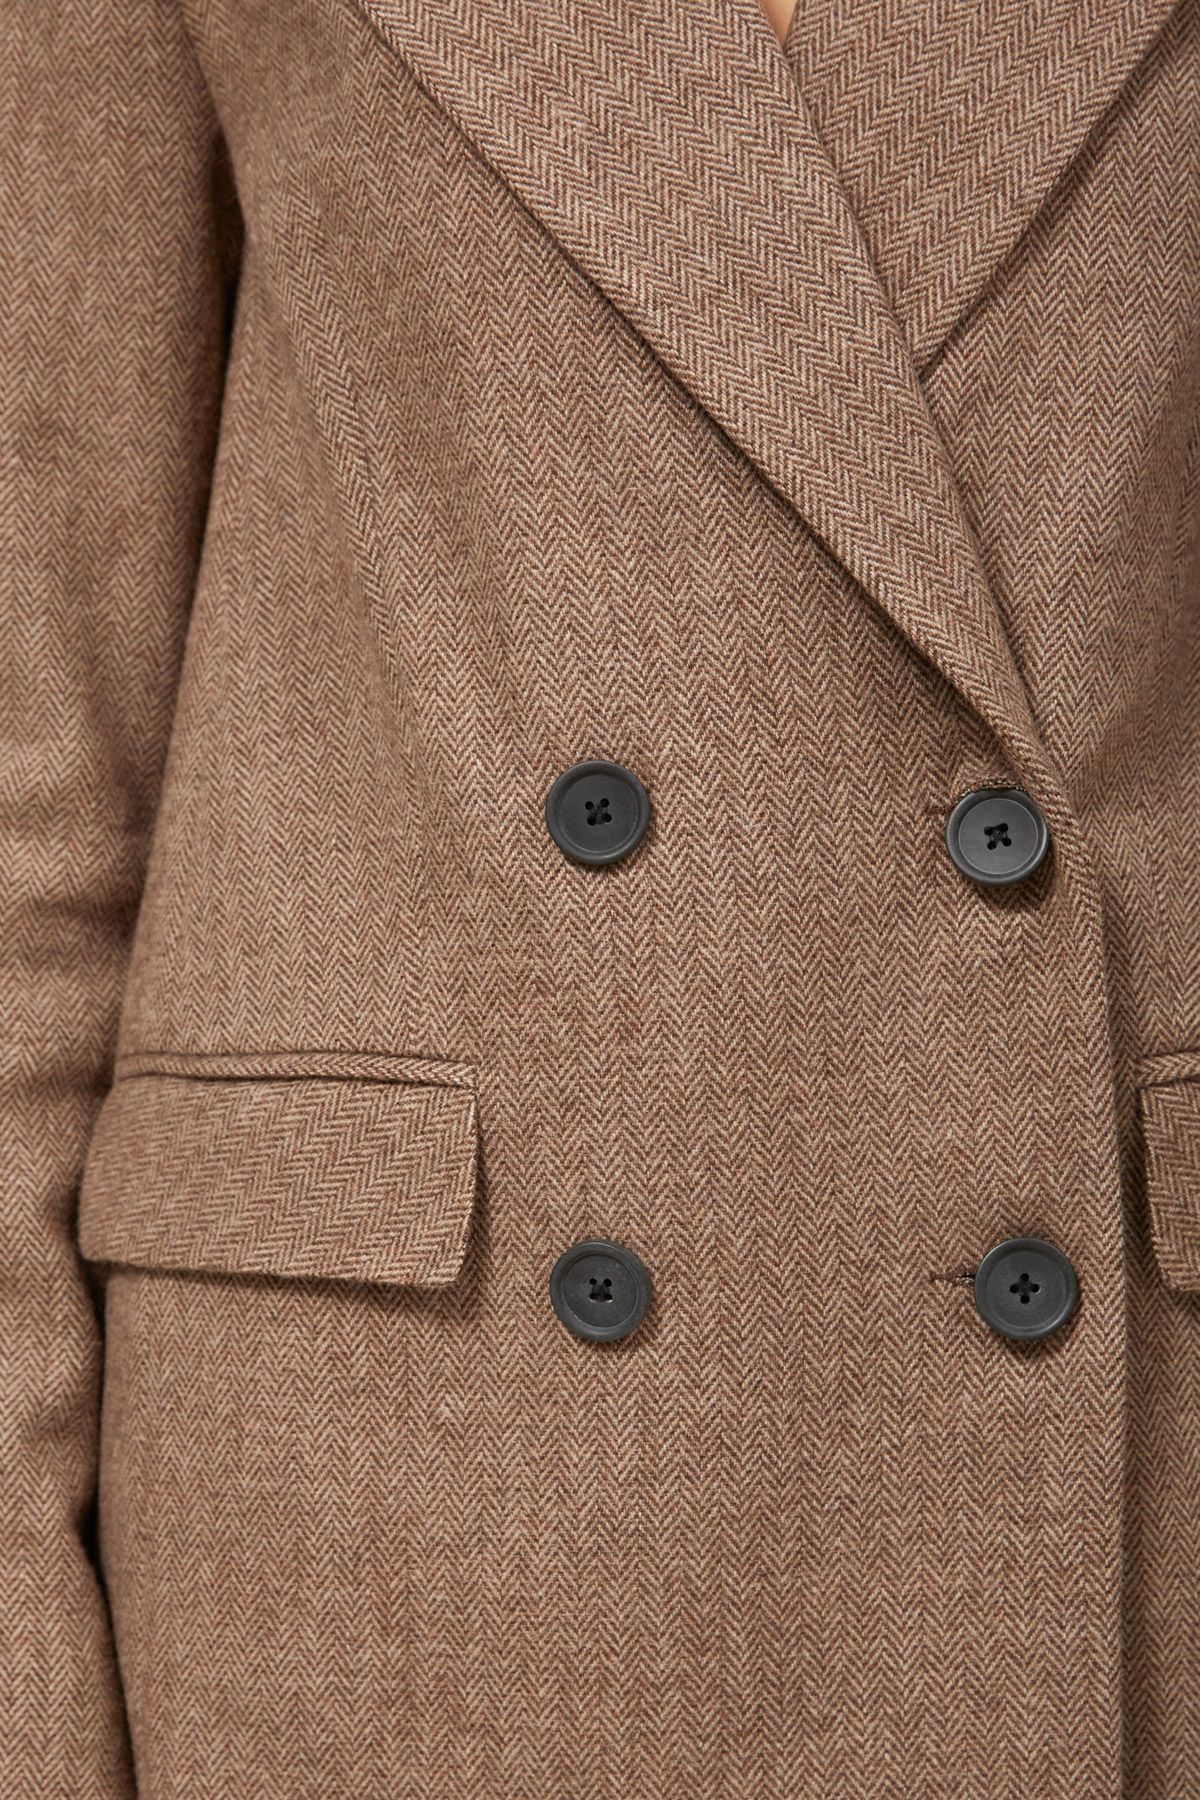 Double-breasted jacket with wool in brown herringbone print, photo 5